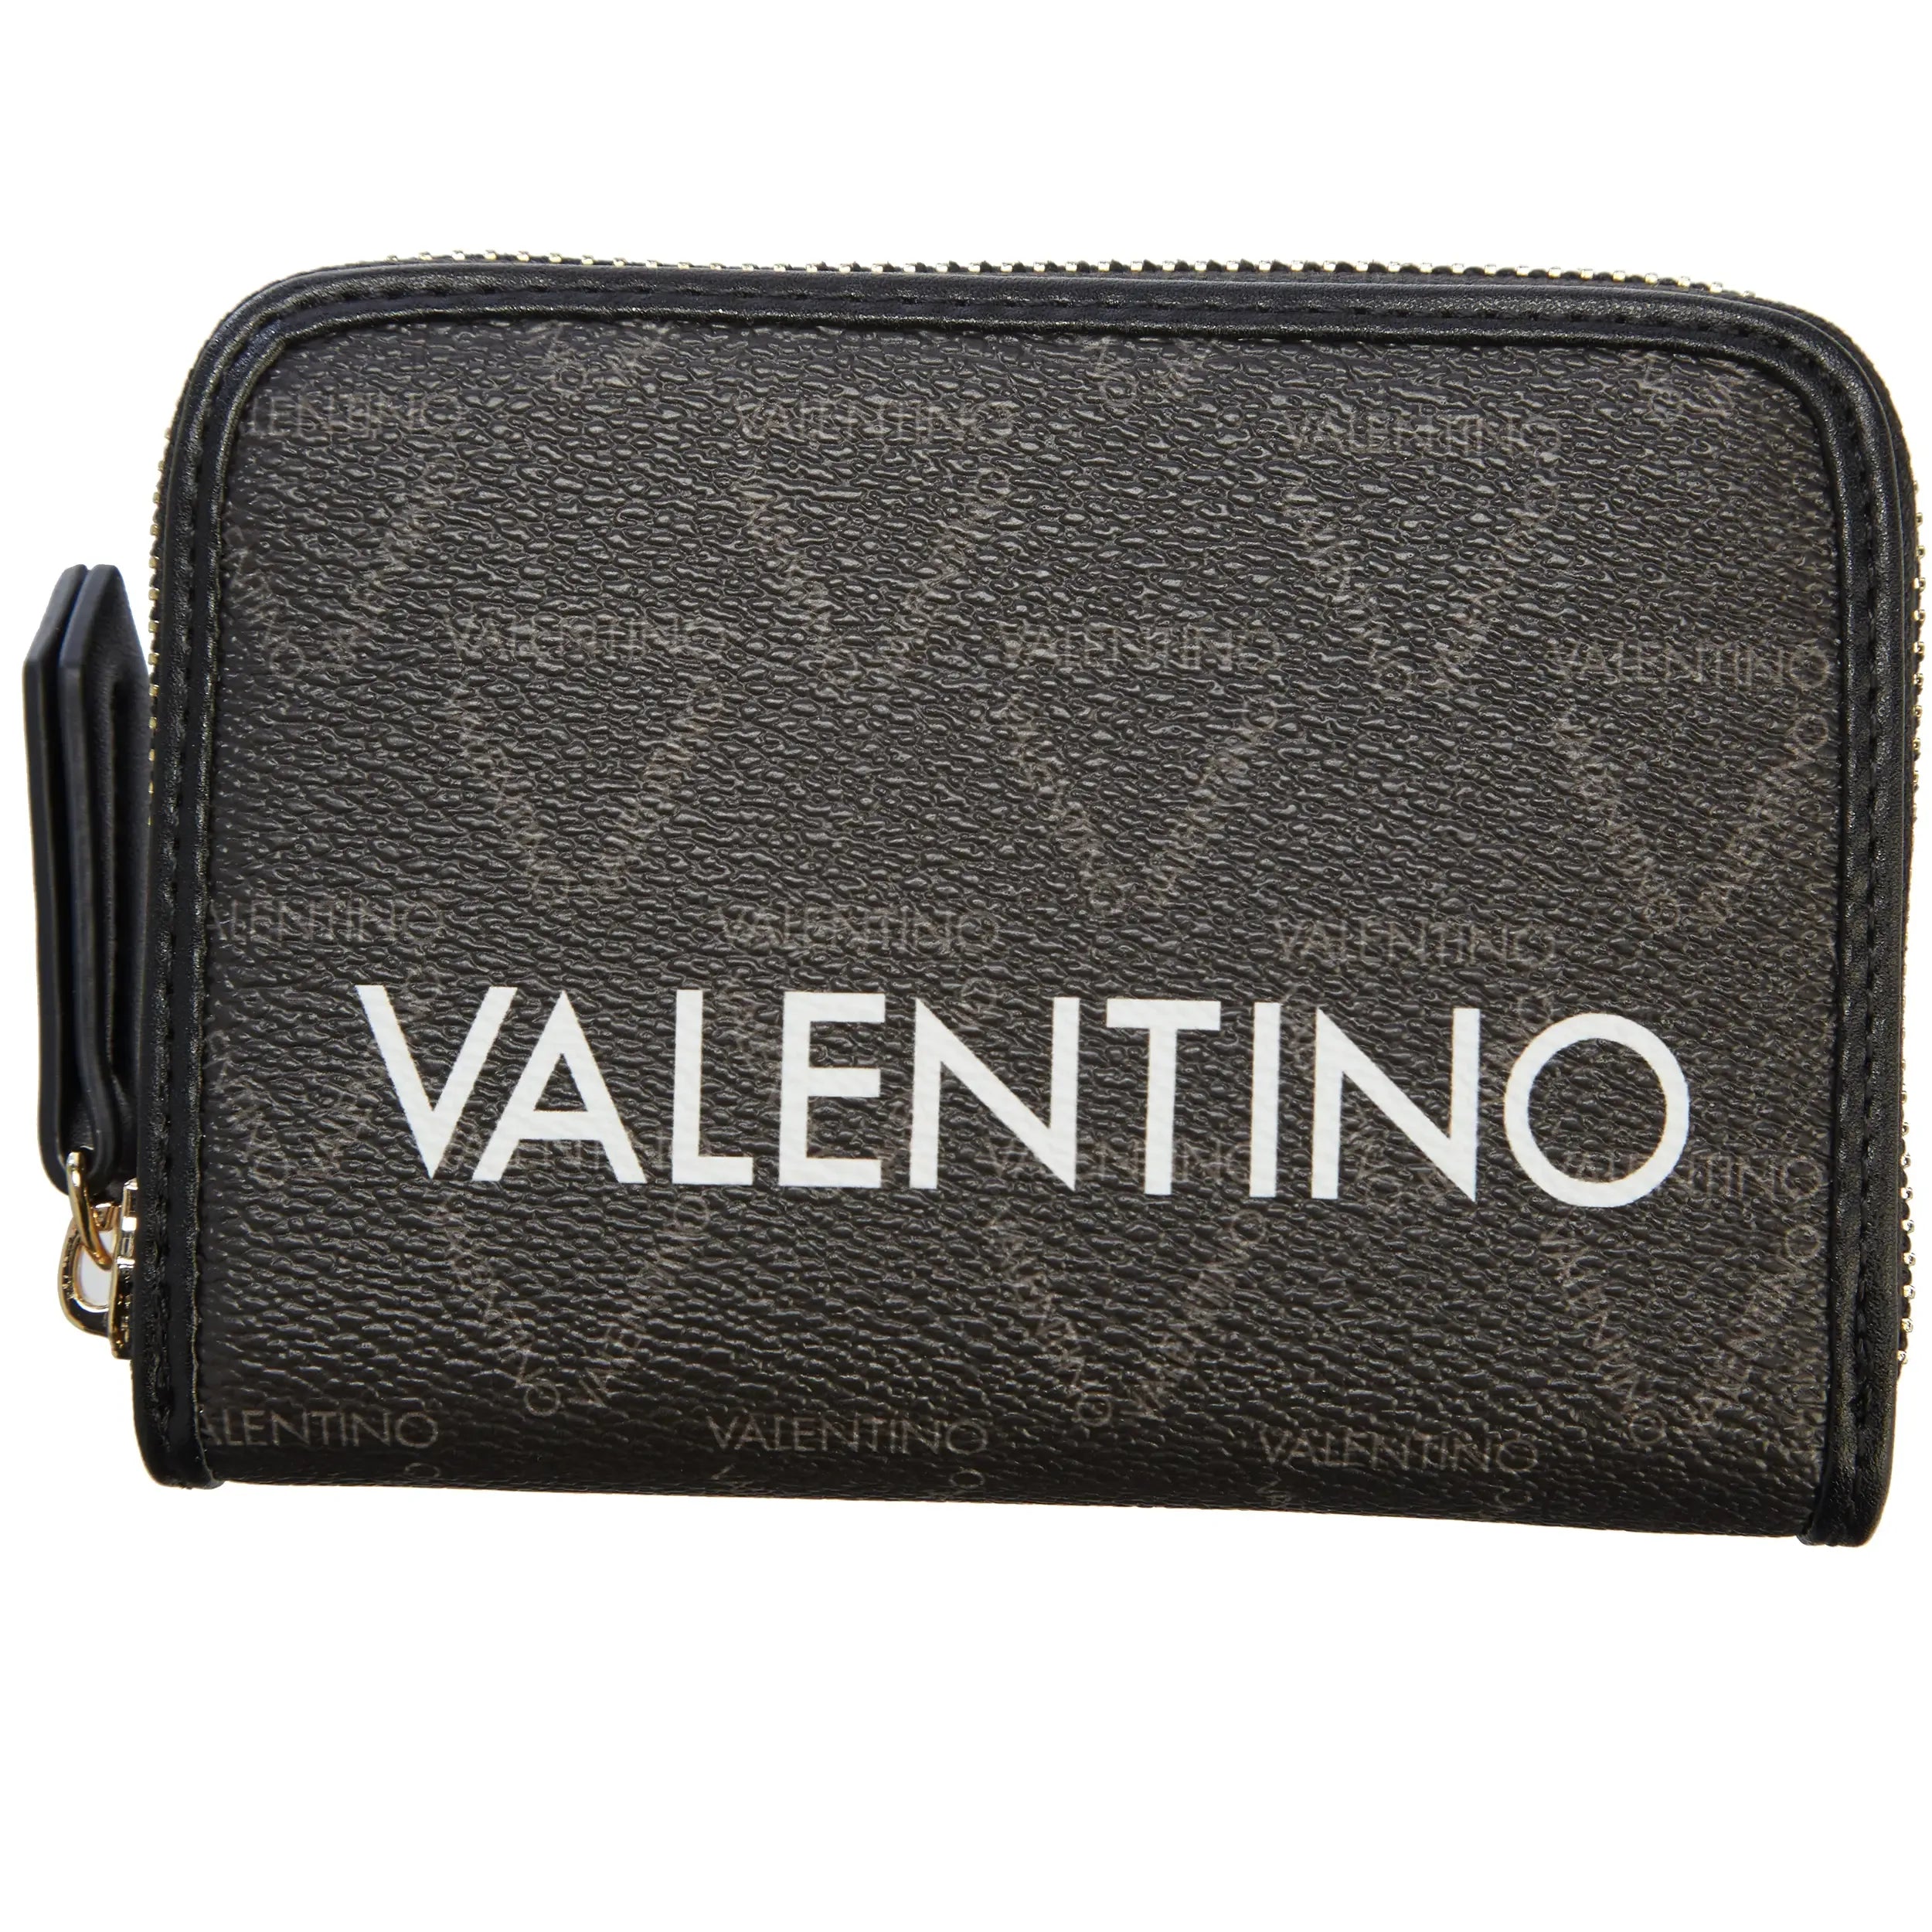 Valentino Bags Portefeuille Liuto 13 cm - Noir/Multicolore